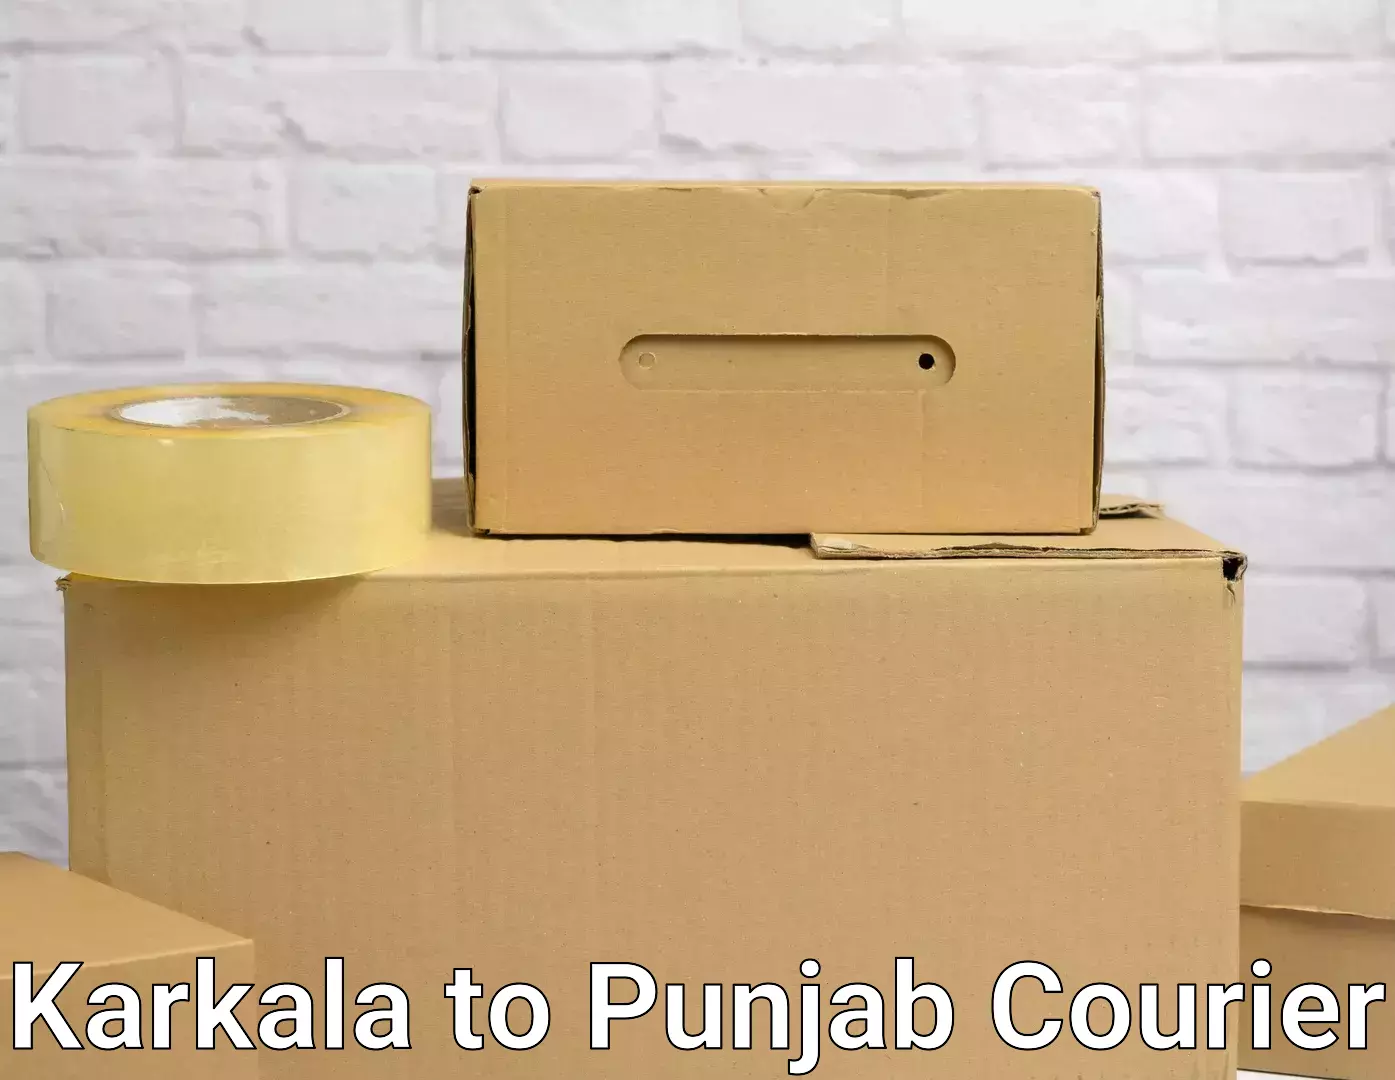 Home shifting experts Karkala to Punjab